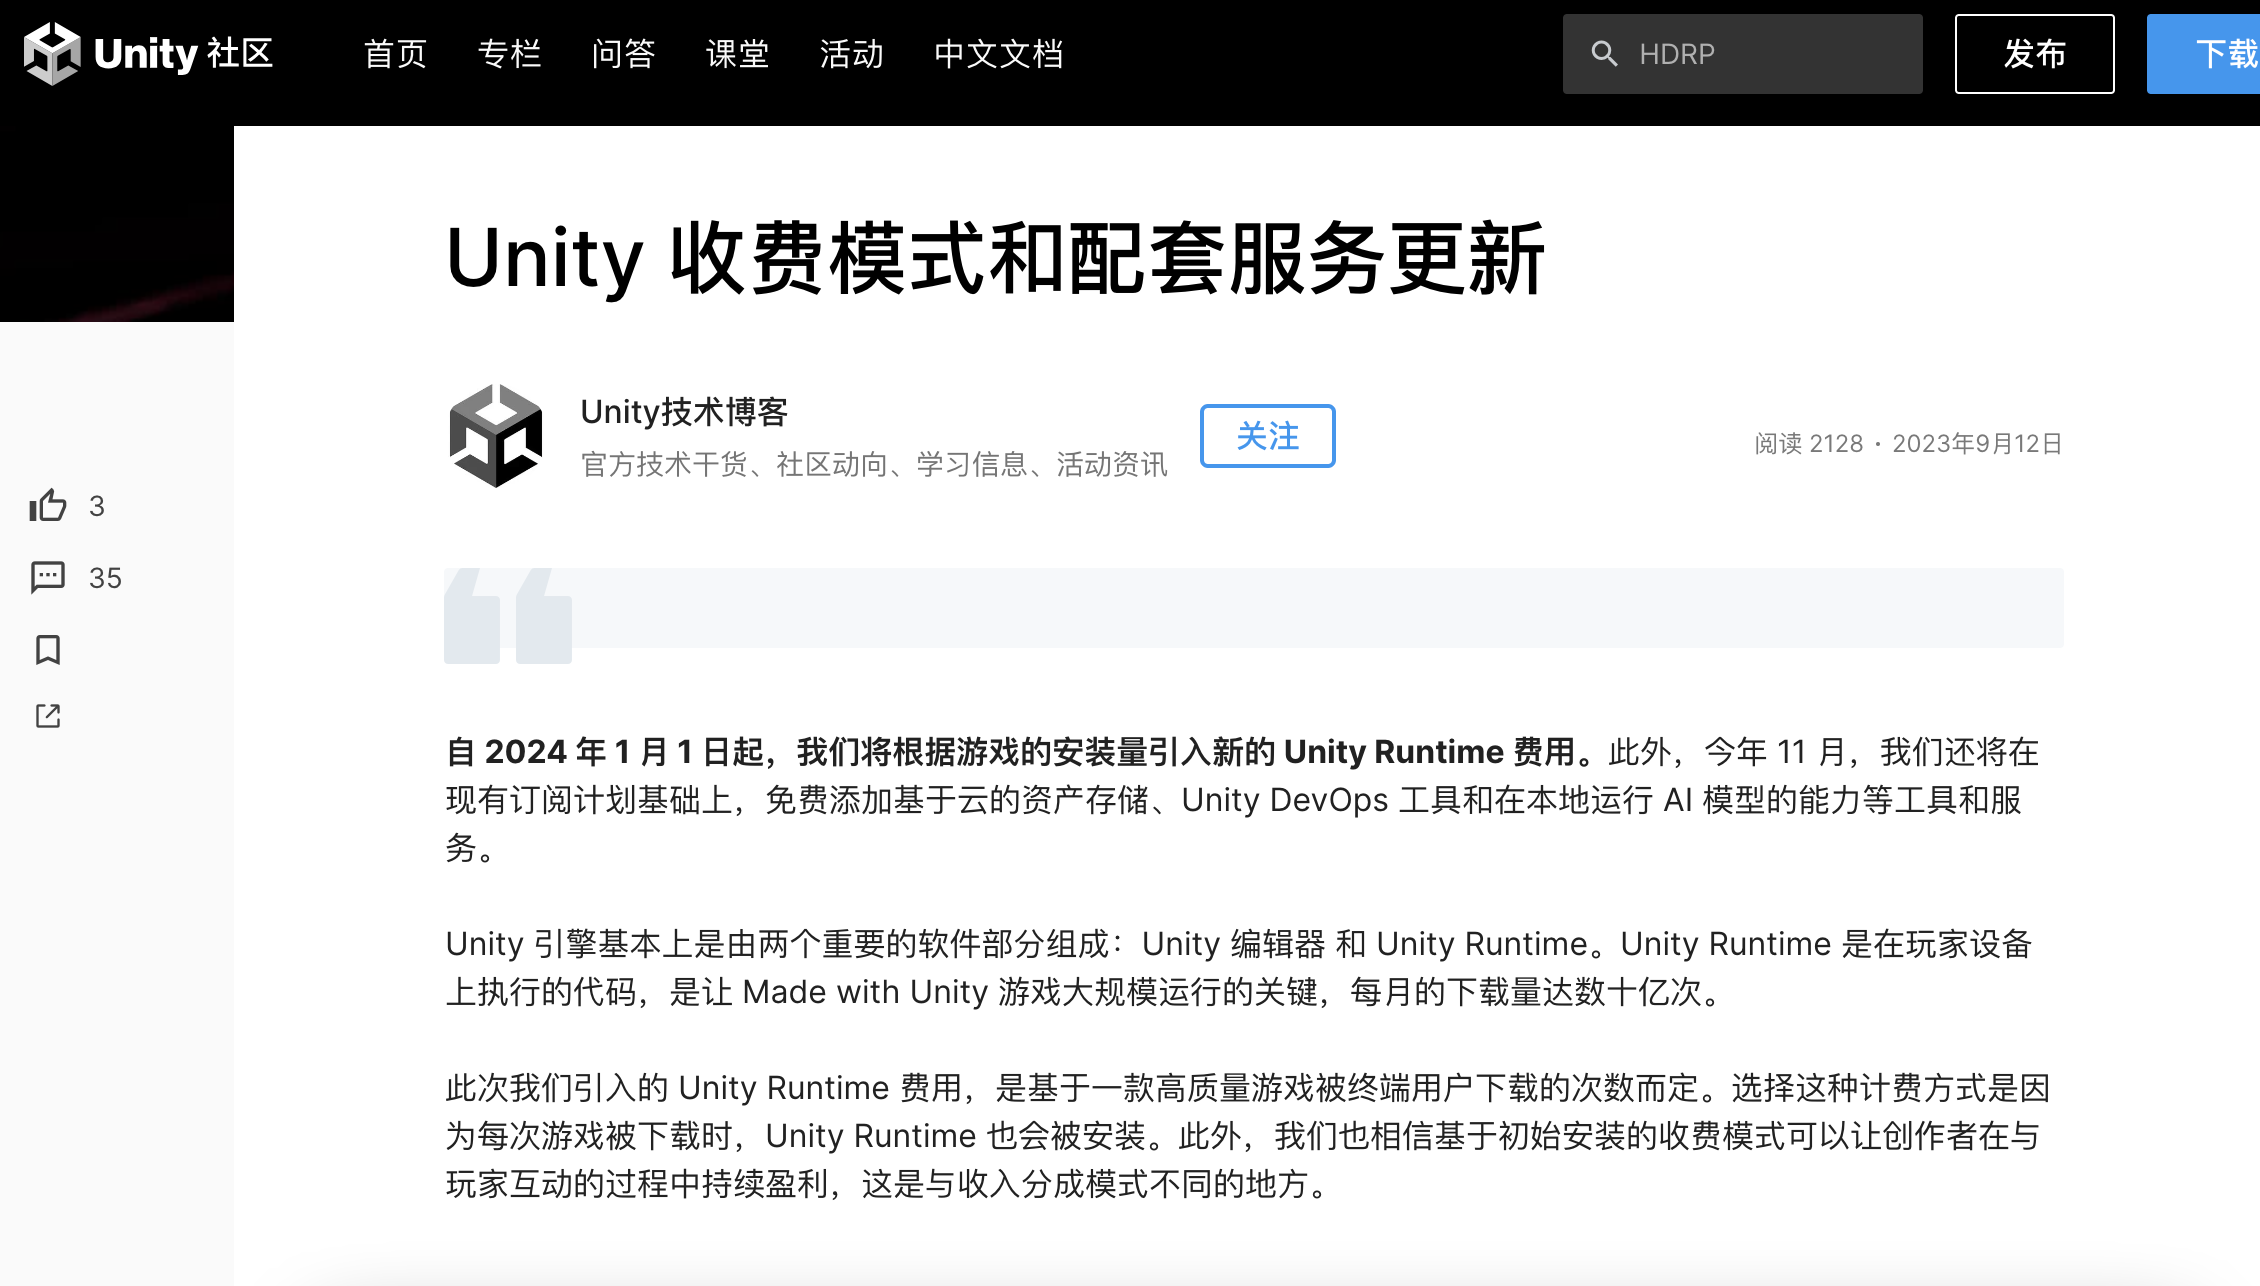 Unity引发游戏圈“地震” 按游戏下载量“征税”合理吗？